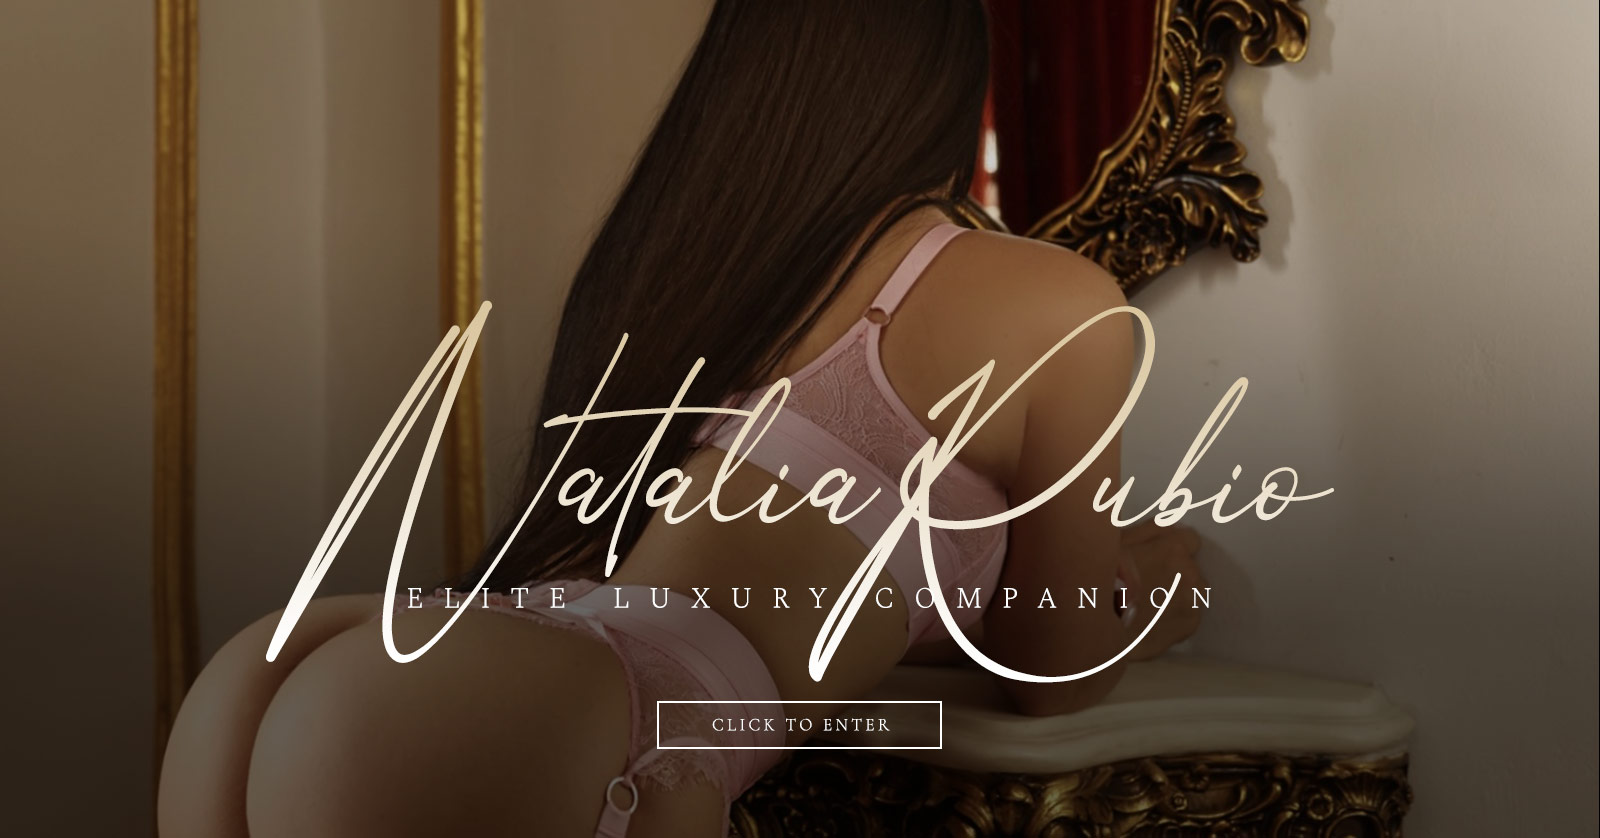 Natalia Rubio Luxury VIP Companion